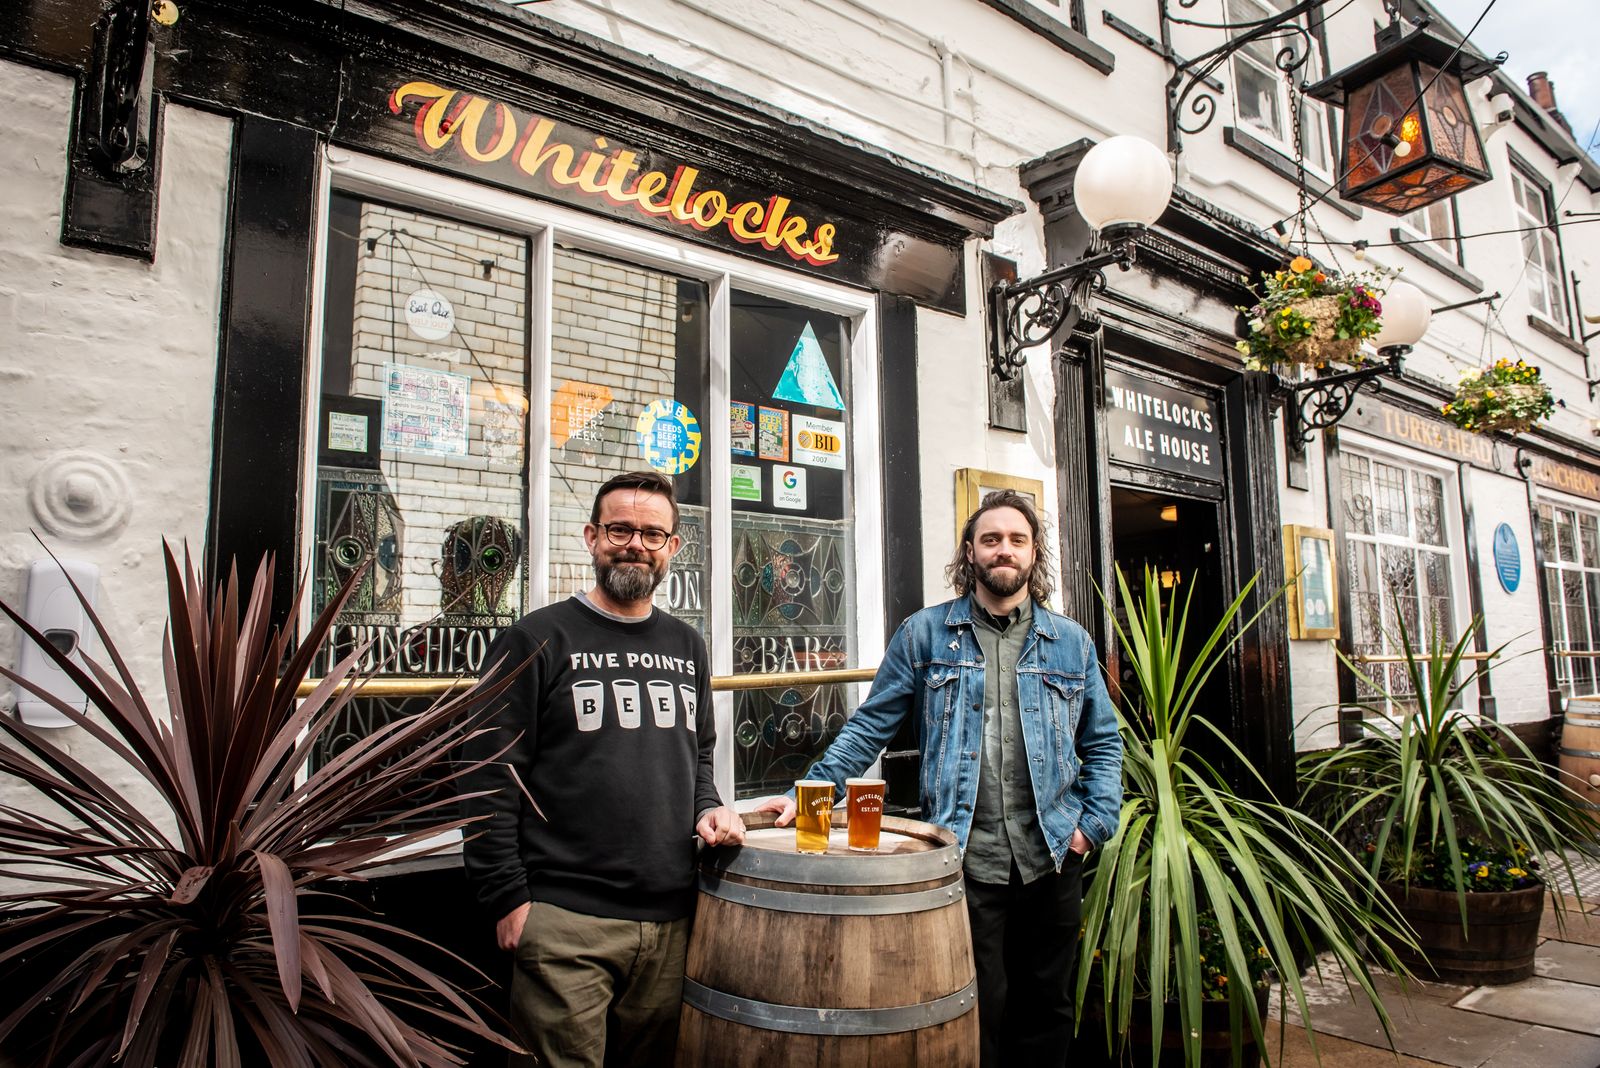 Oldest pub in Leeds set to celebrate Yorkshire's finest independents